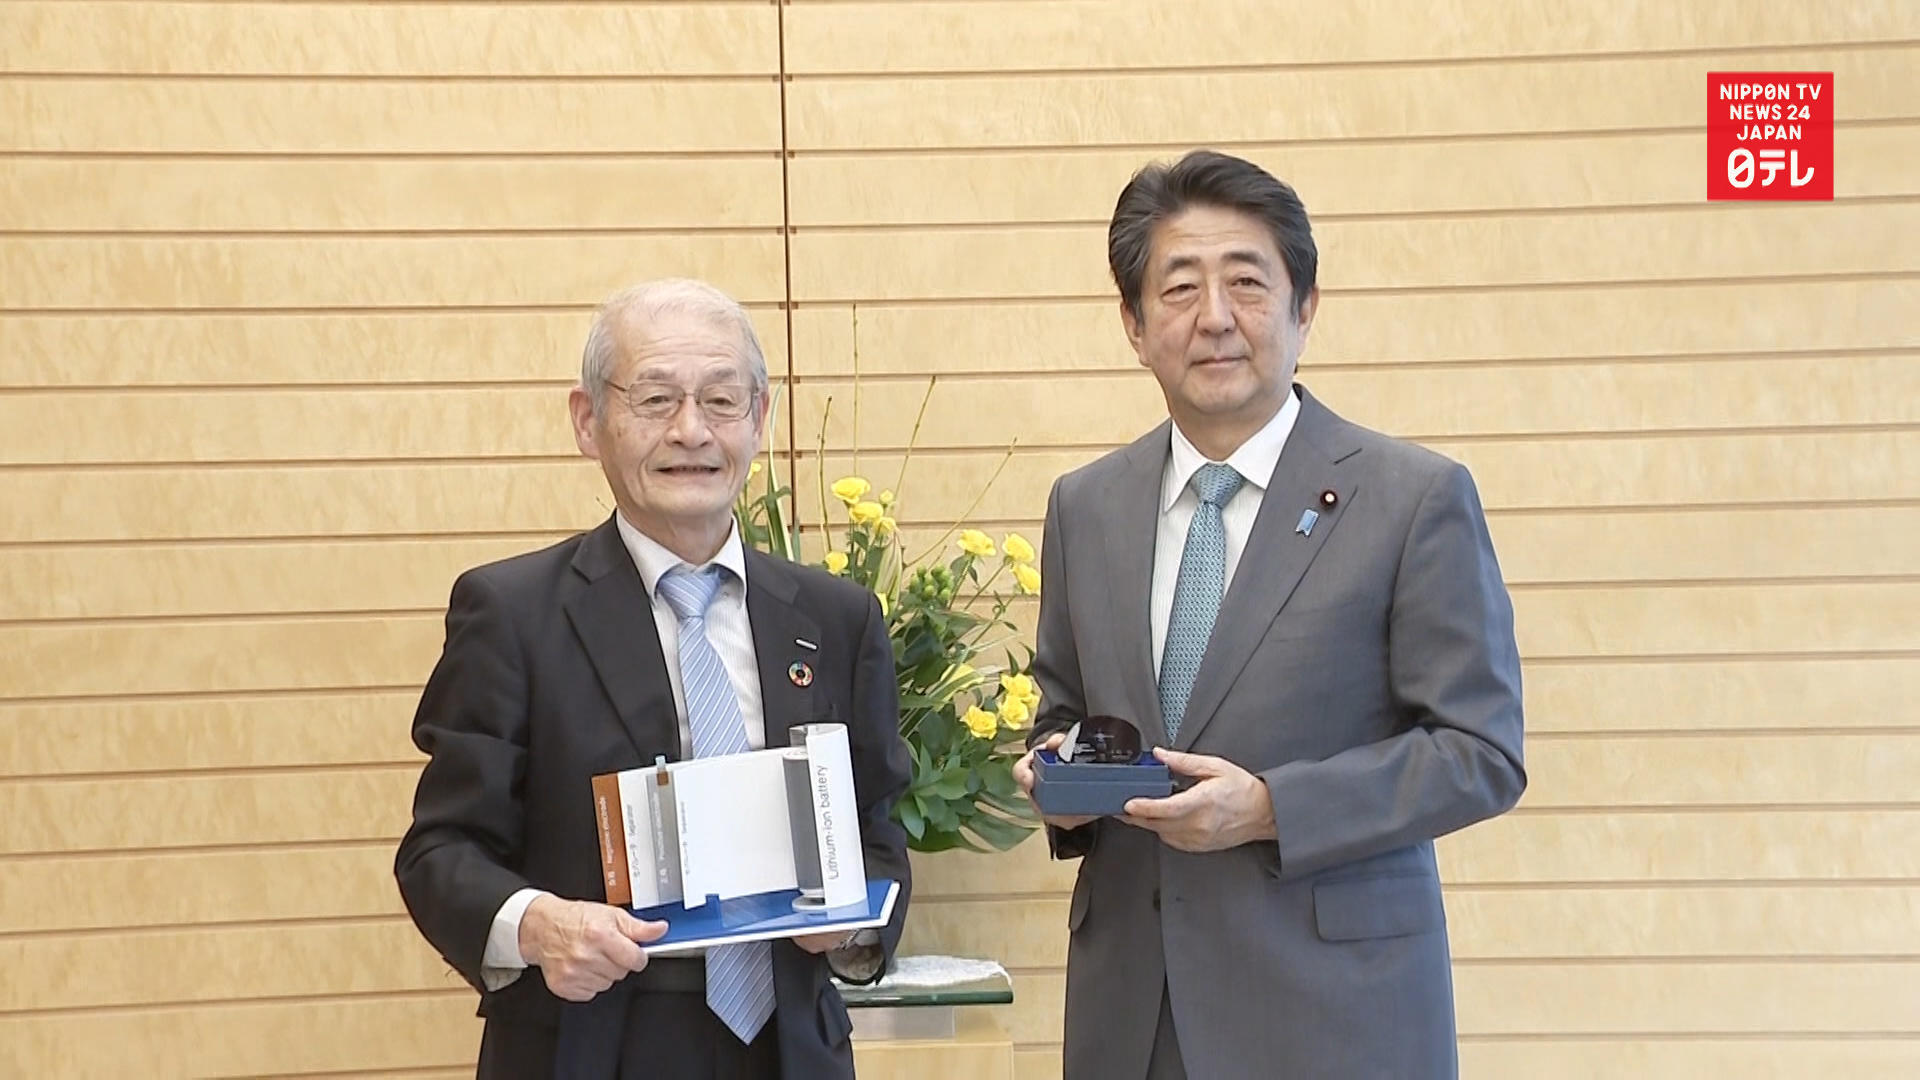 Nobel Prize winner meets PM Abe